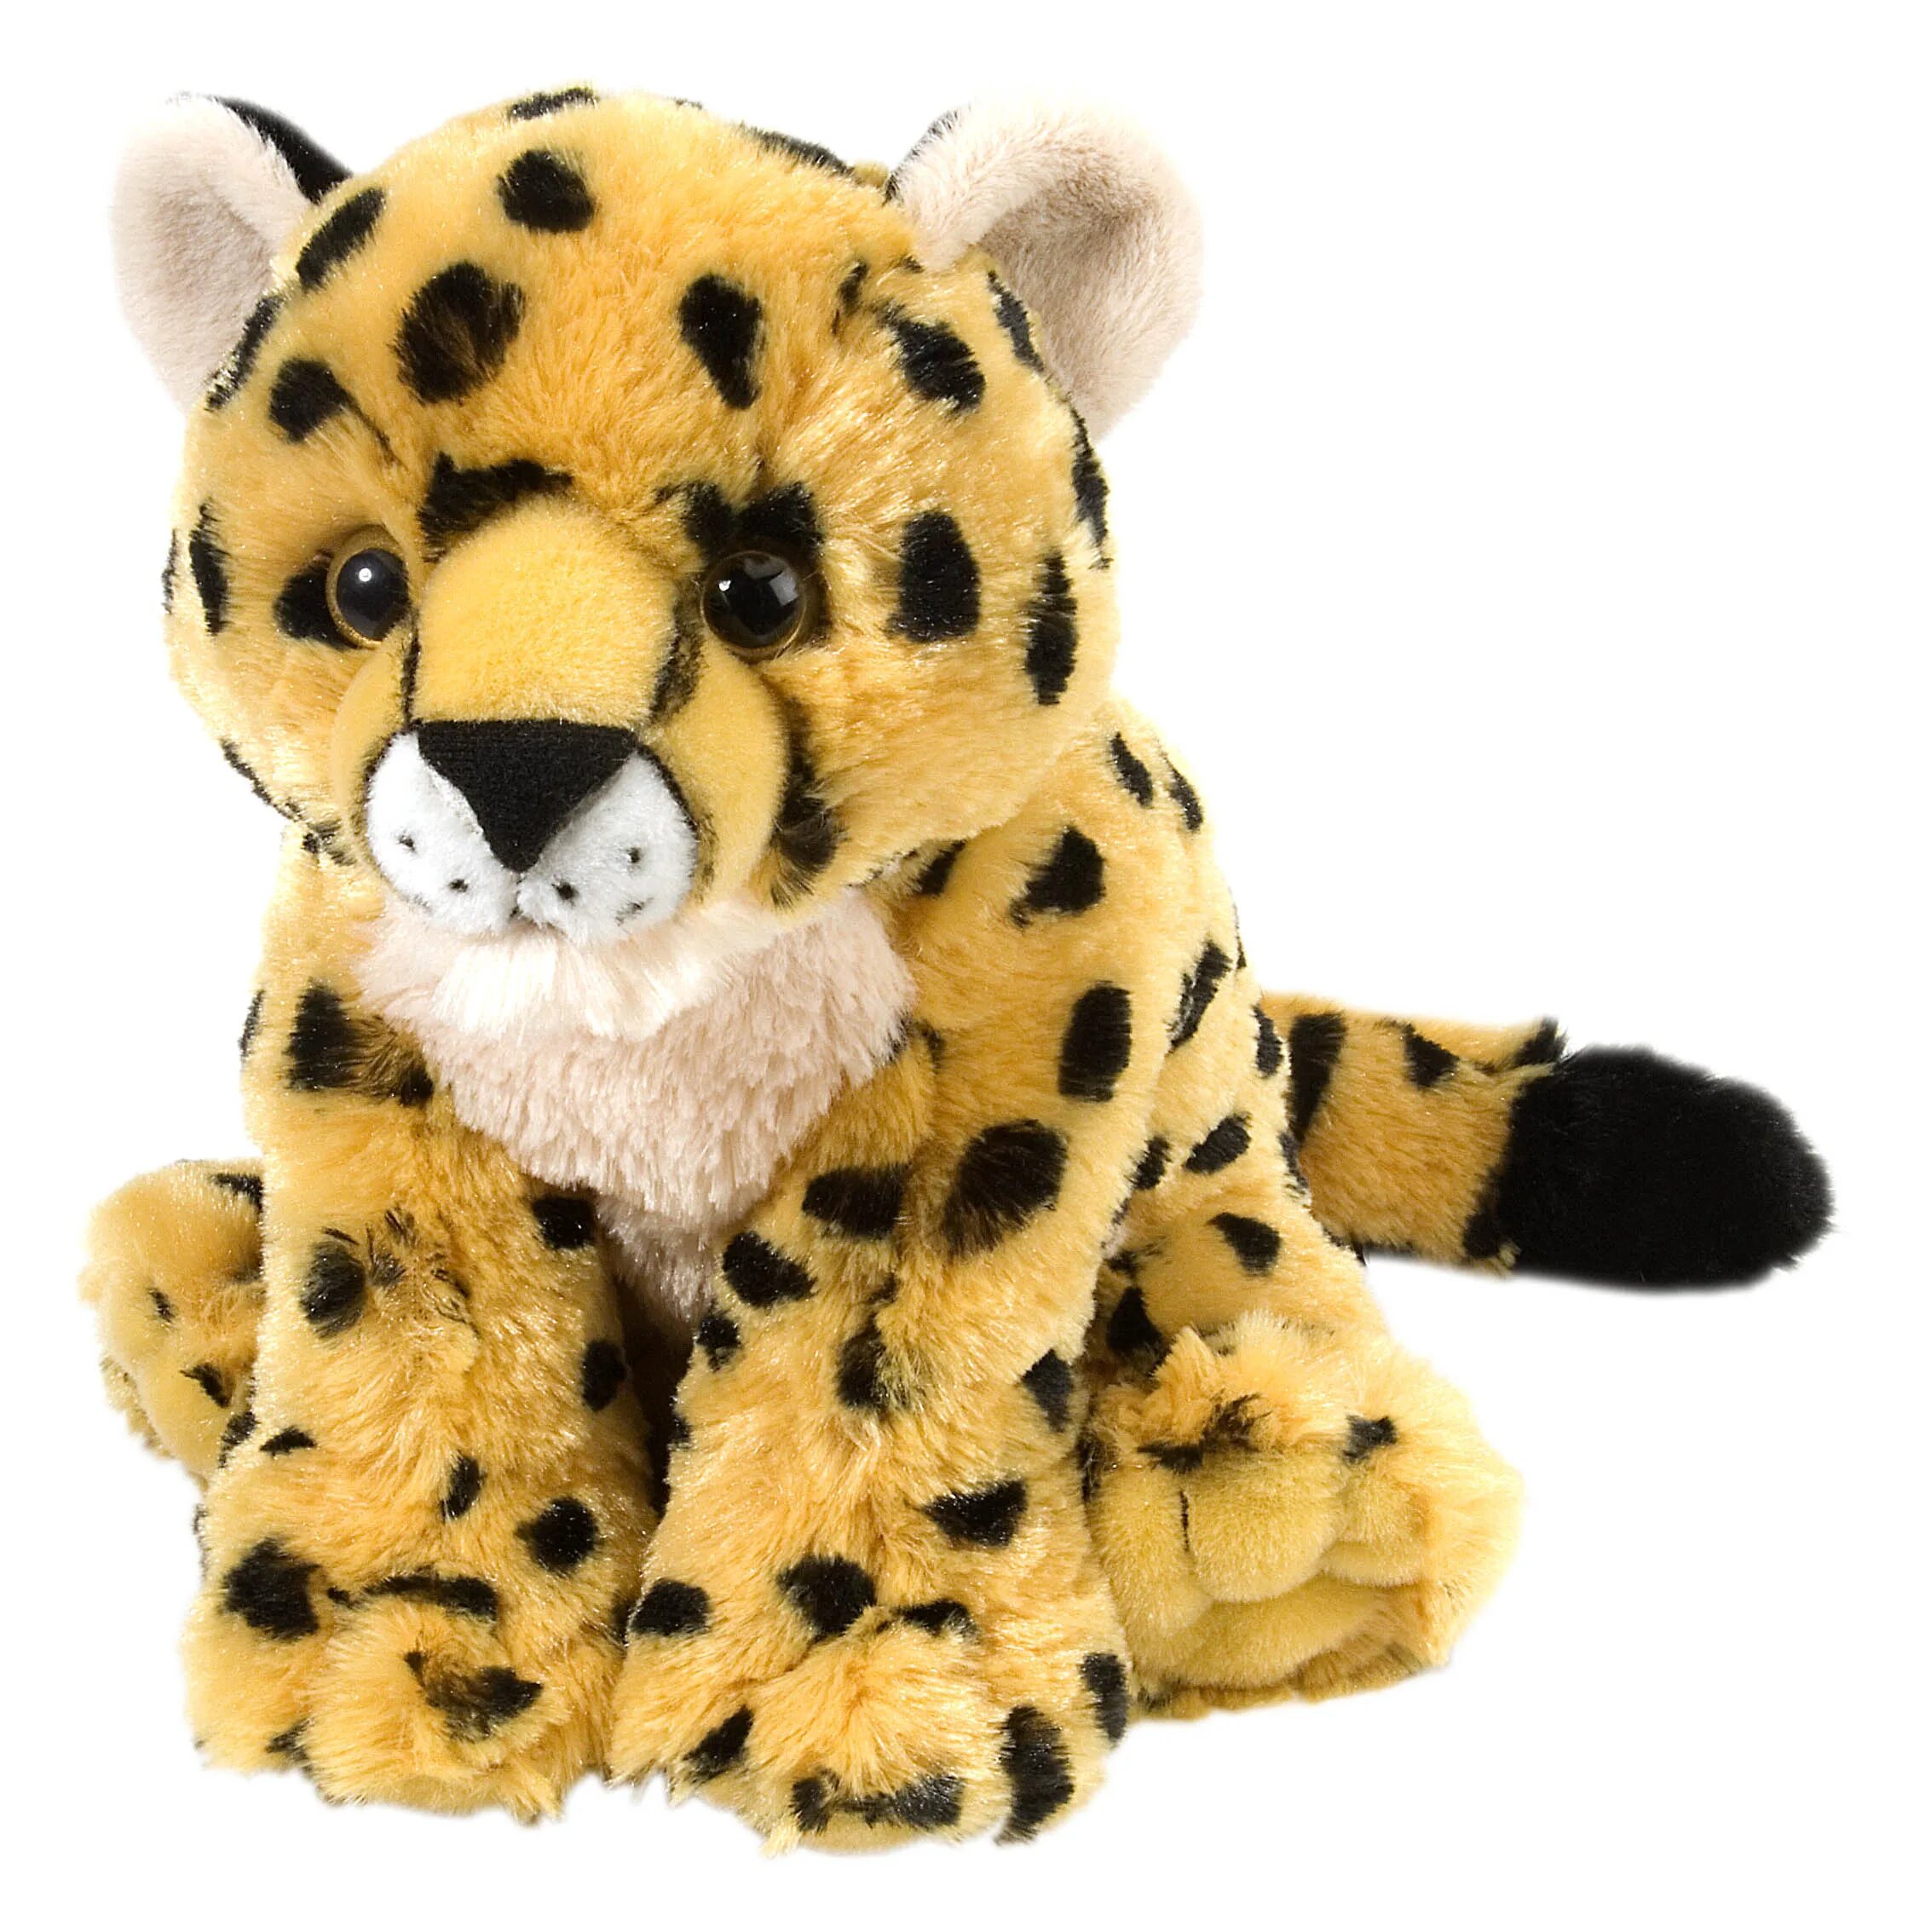 Мягкие игрушки животных купить. Игрушки Ханса леопард. Wild Republic гепард. Плюшевый гепард Честер. Мягкие игрушки животные.